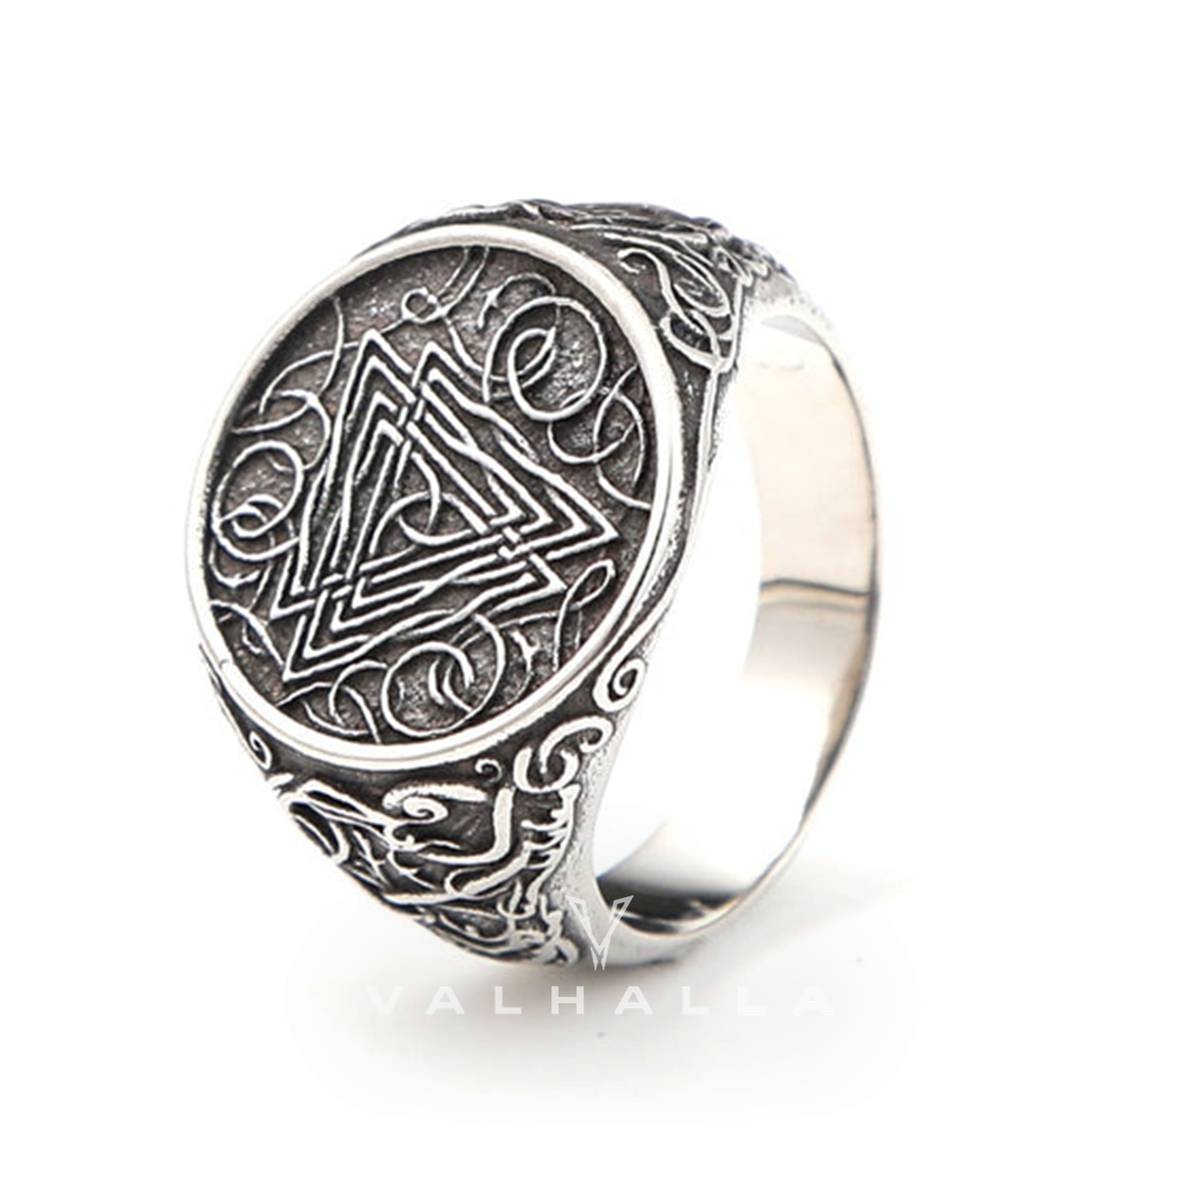 Urnes Valknut Stainless Steel Viking Ring